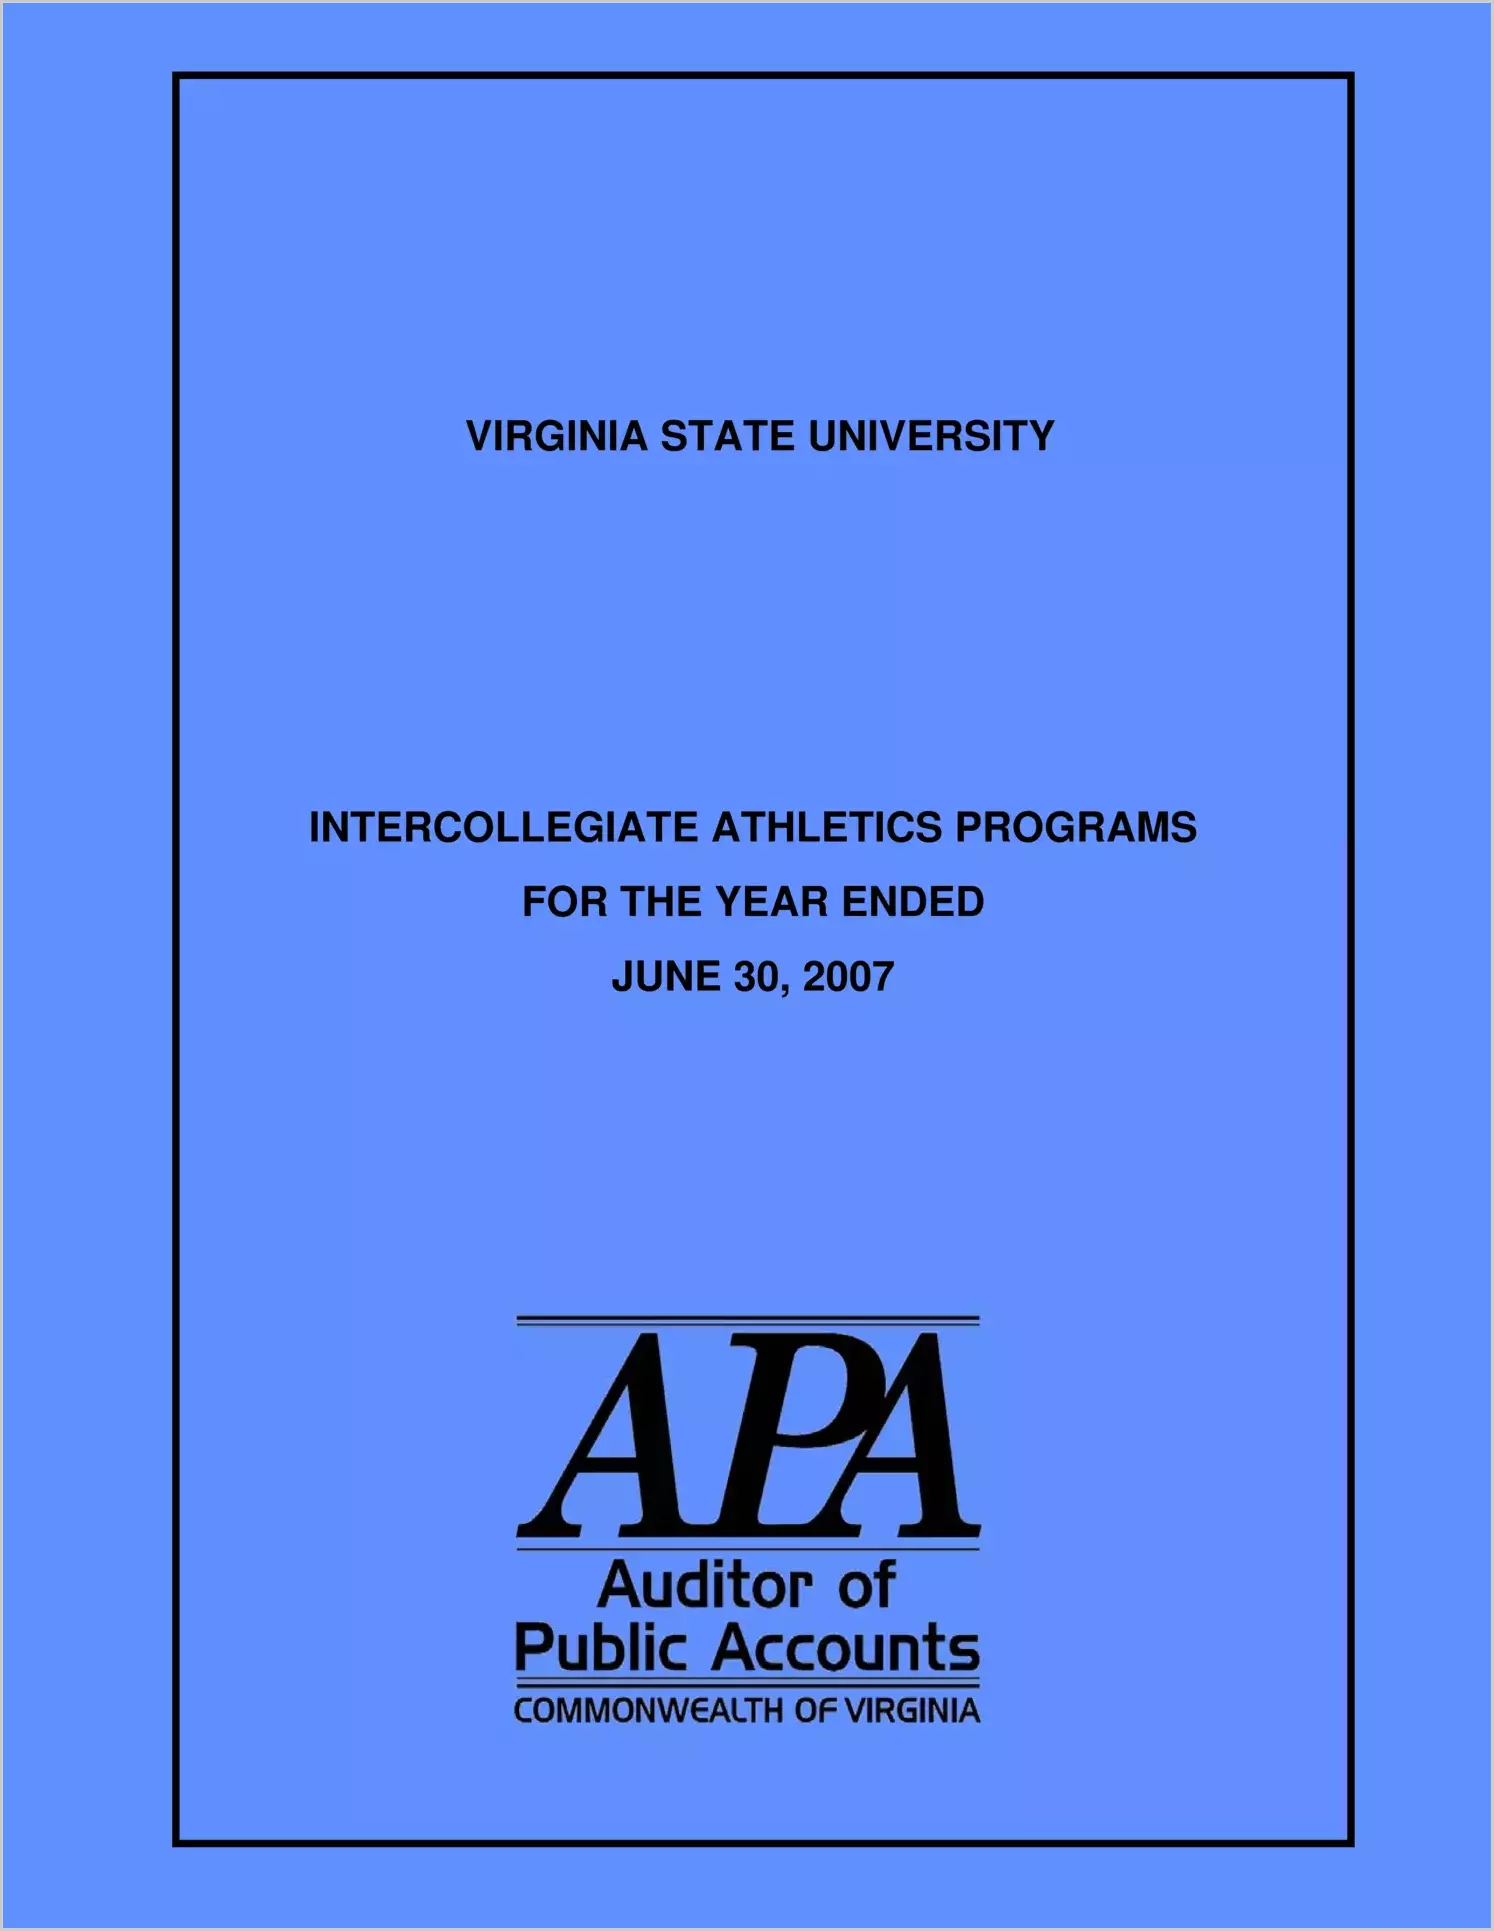 Virginia State University Intercollegiate Athletics Programs for the year ended June 30, 2007